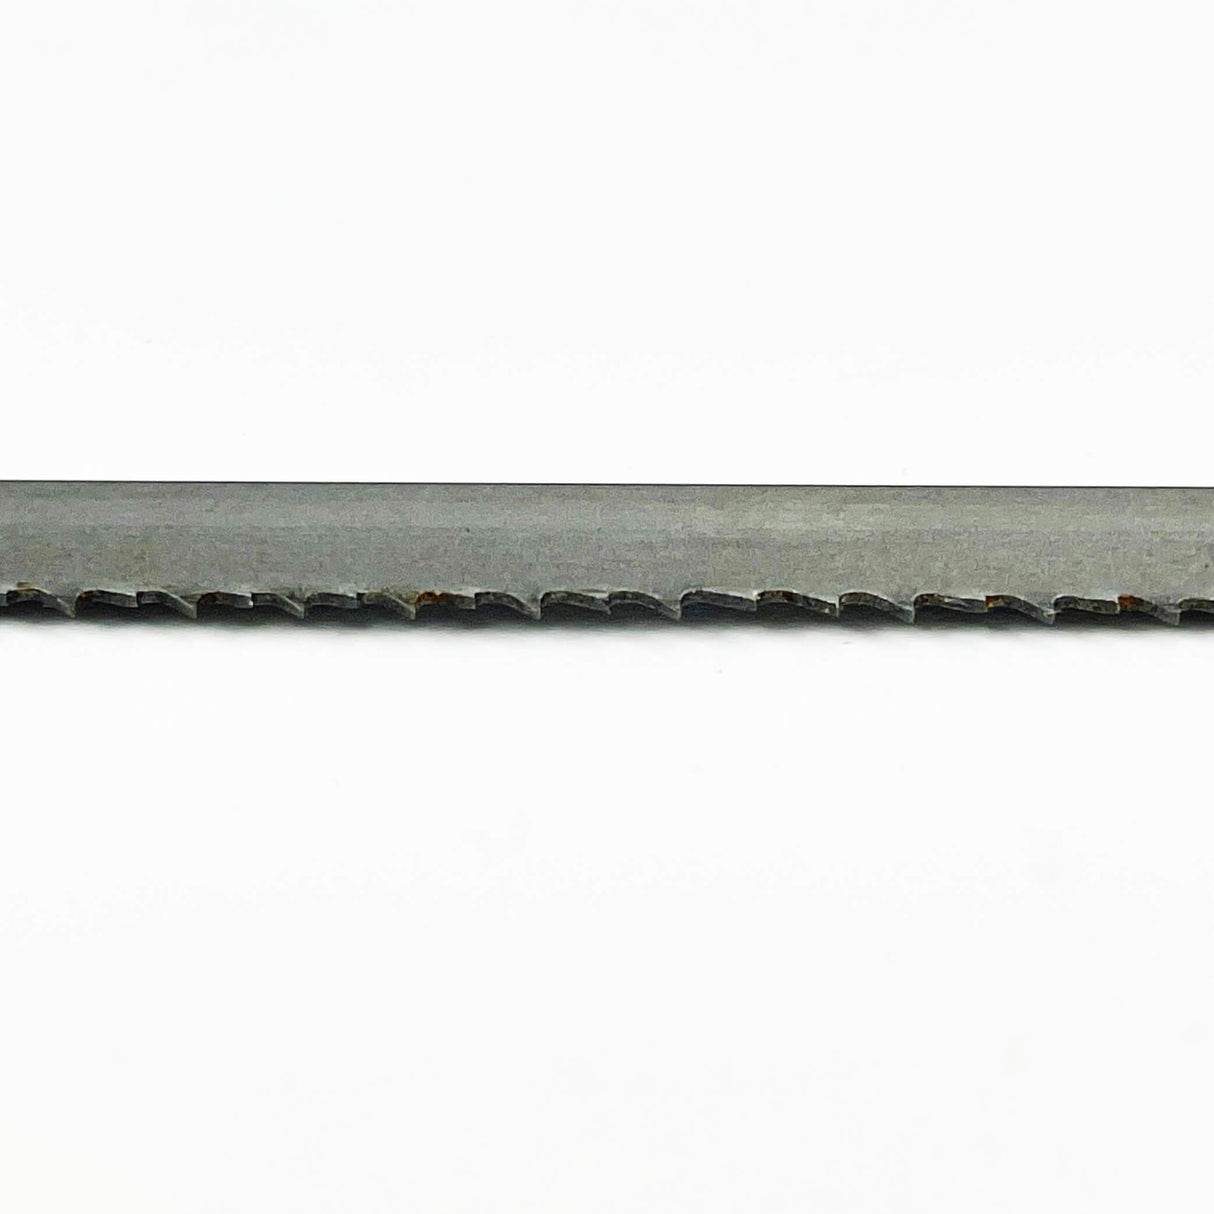 1830mm Μήκος x 13mm Πλάτος COBALT M42 Διμεταλικό πριόνι ταινίας - Πακέτο 2 λεπίδων